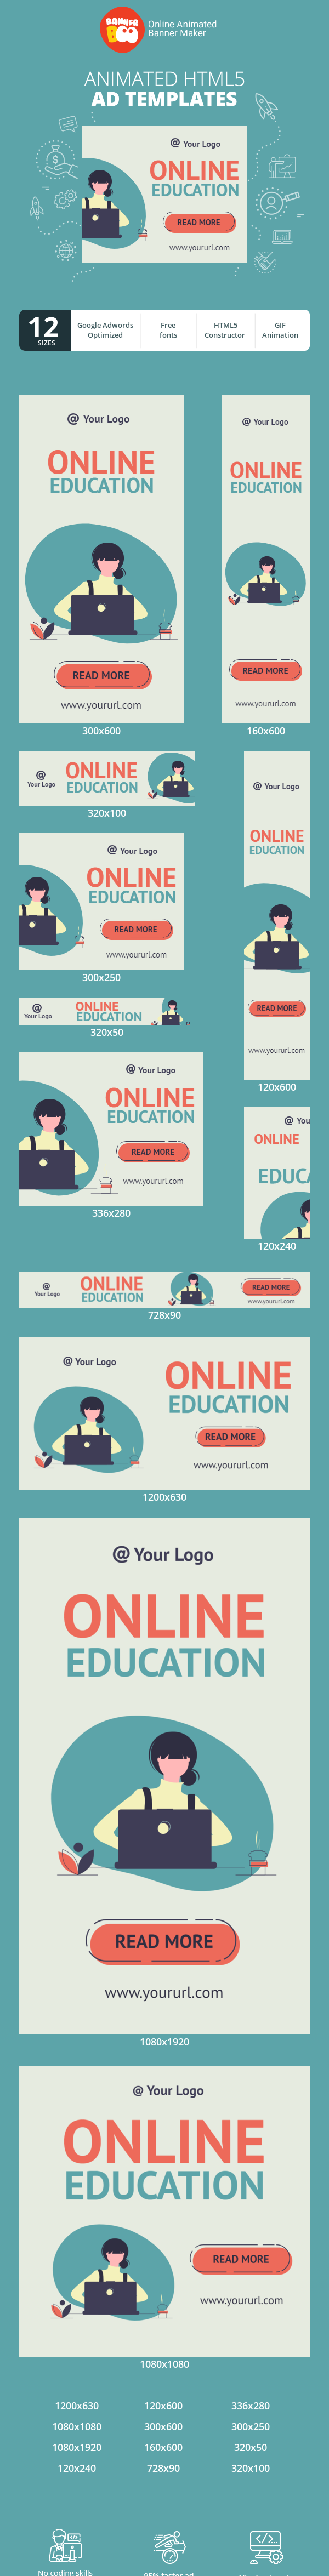 Szablon reklamy banerowej — Online Education